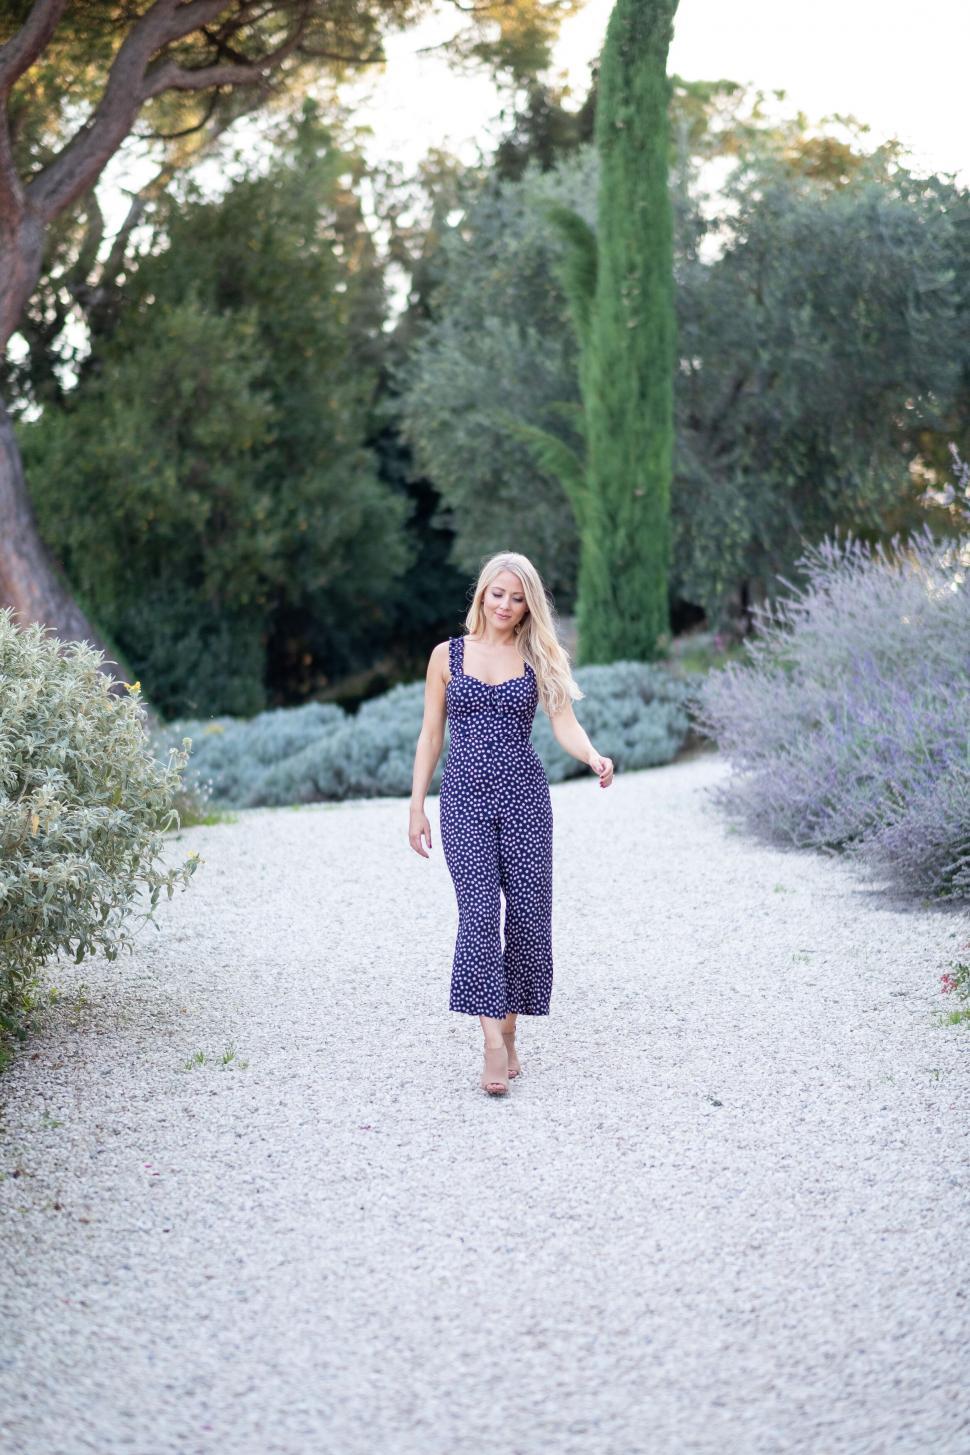 Free Image of Woman strolling in a Mediterranean garden 